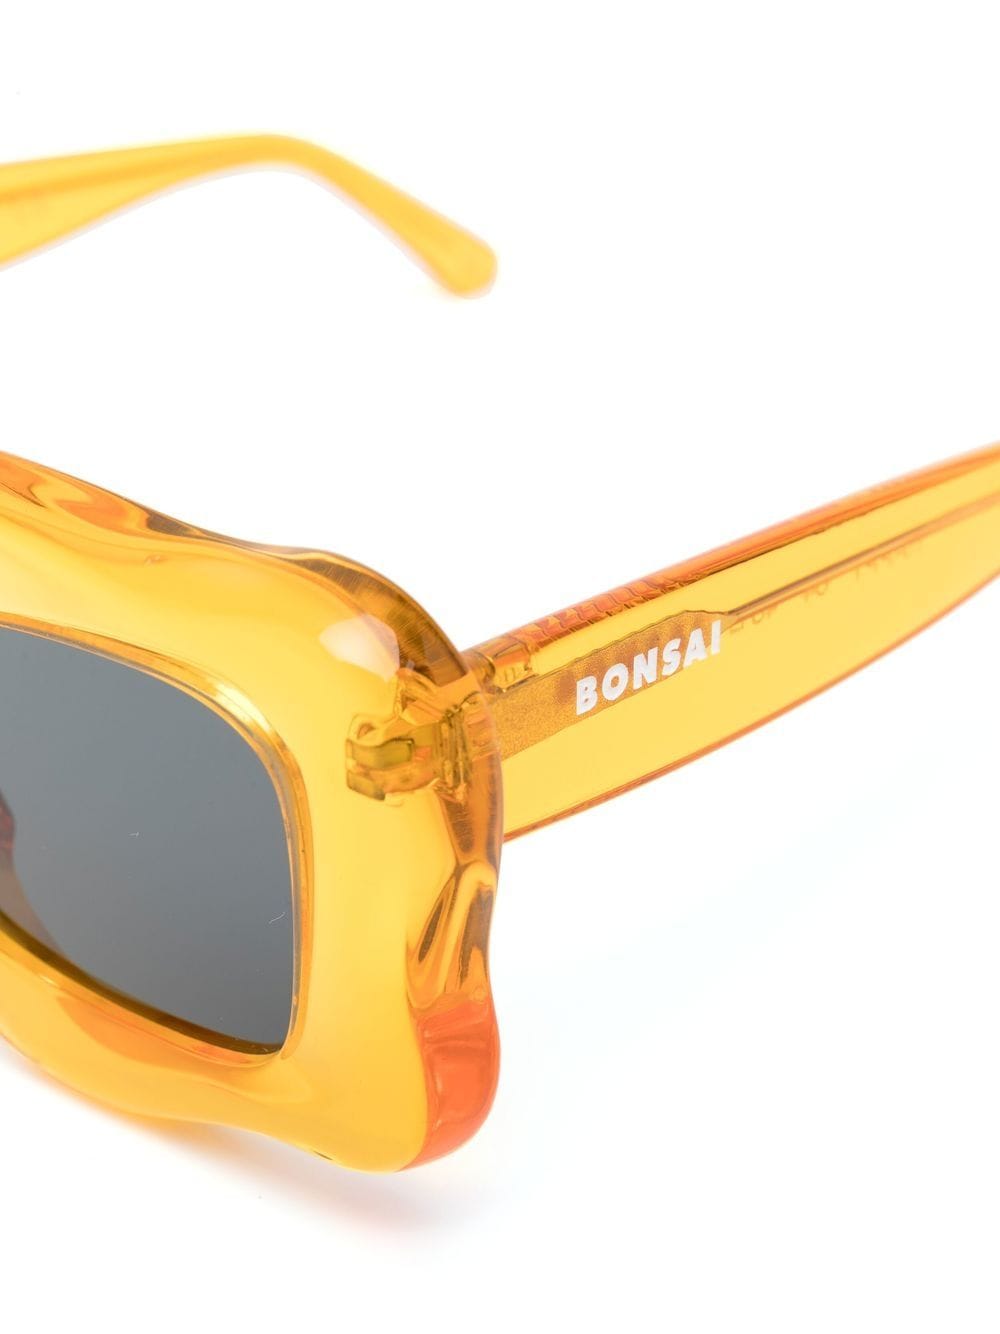 Bonsai x Ophy Sunglasses